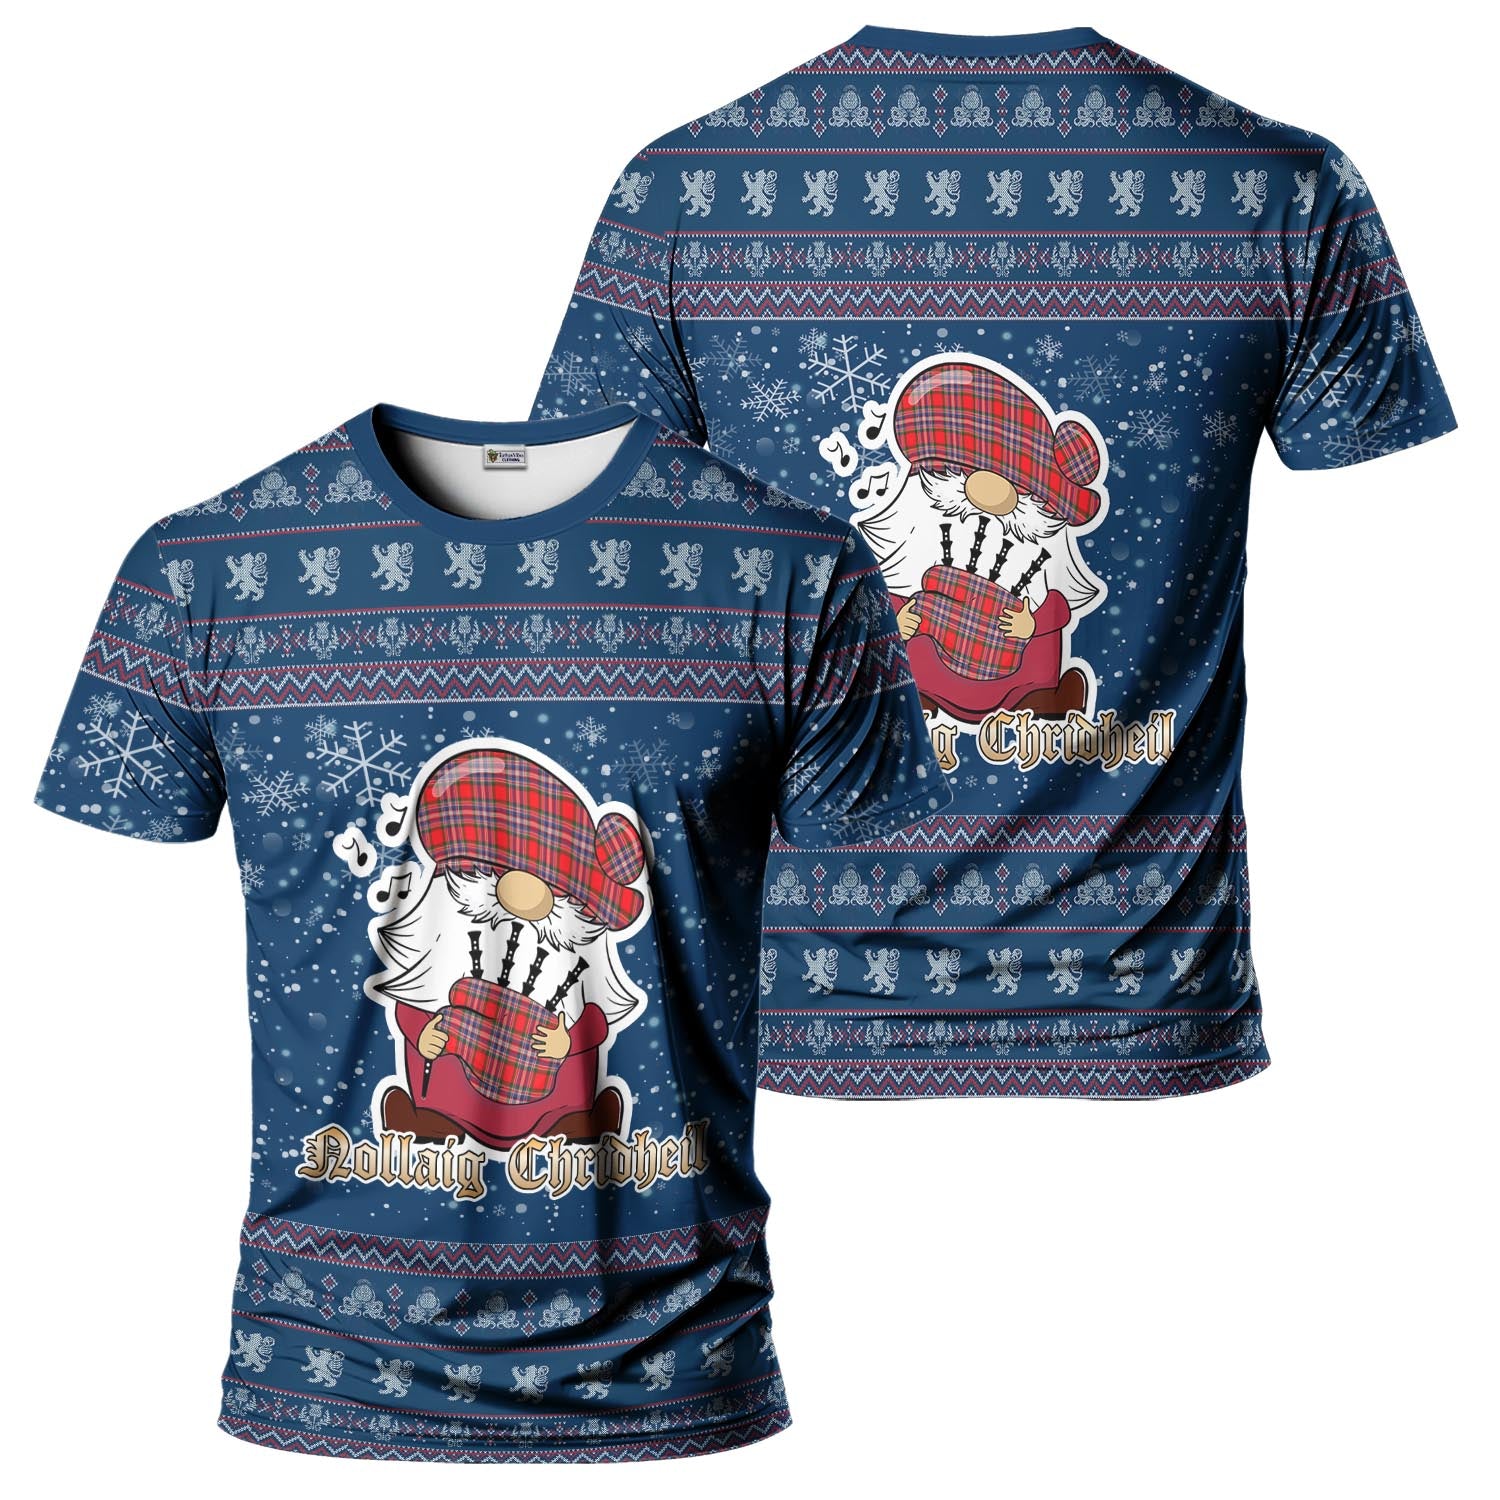 MacFarlane Modern Clan Christmas Family T-Shirt with Funny Gnome Playing Bagpipes Kid's Shirt Blue - Tartanvibesclothing